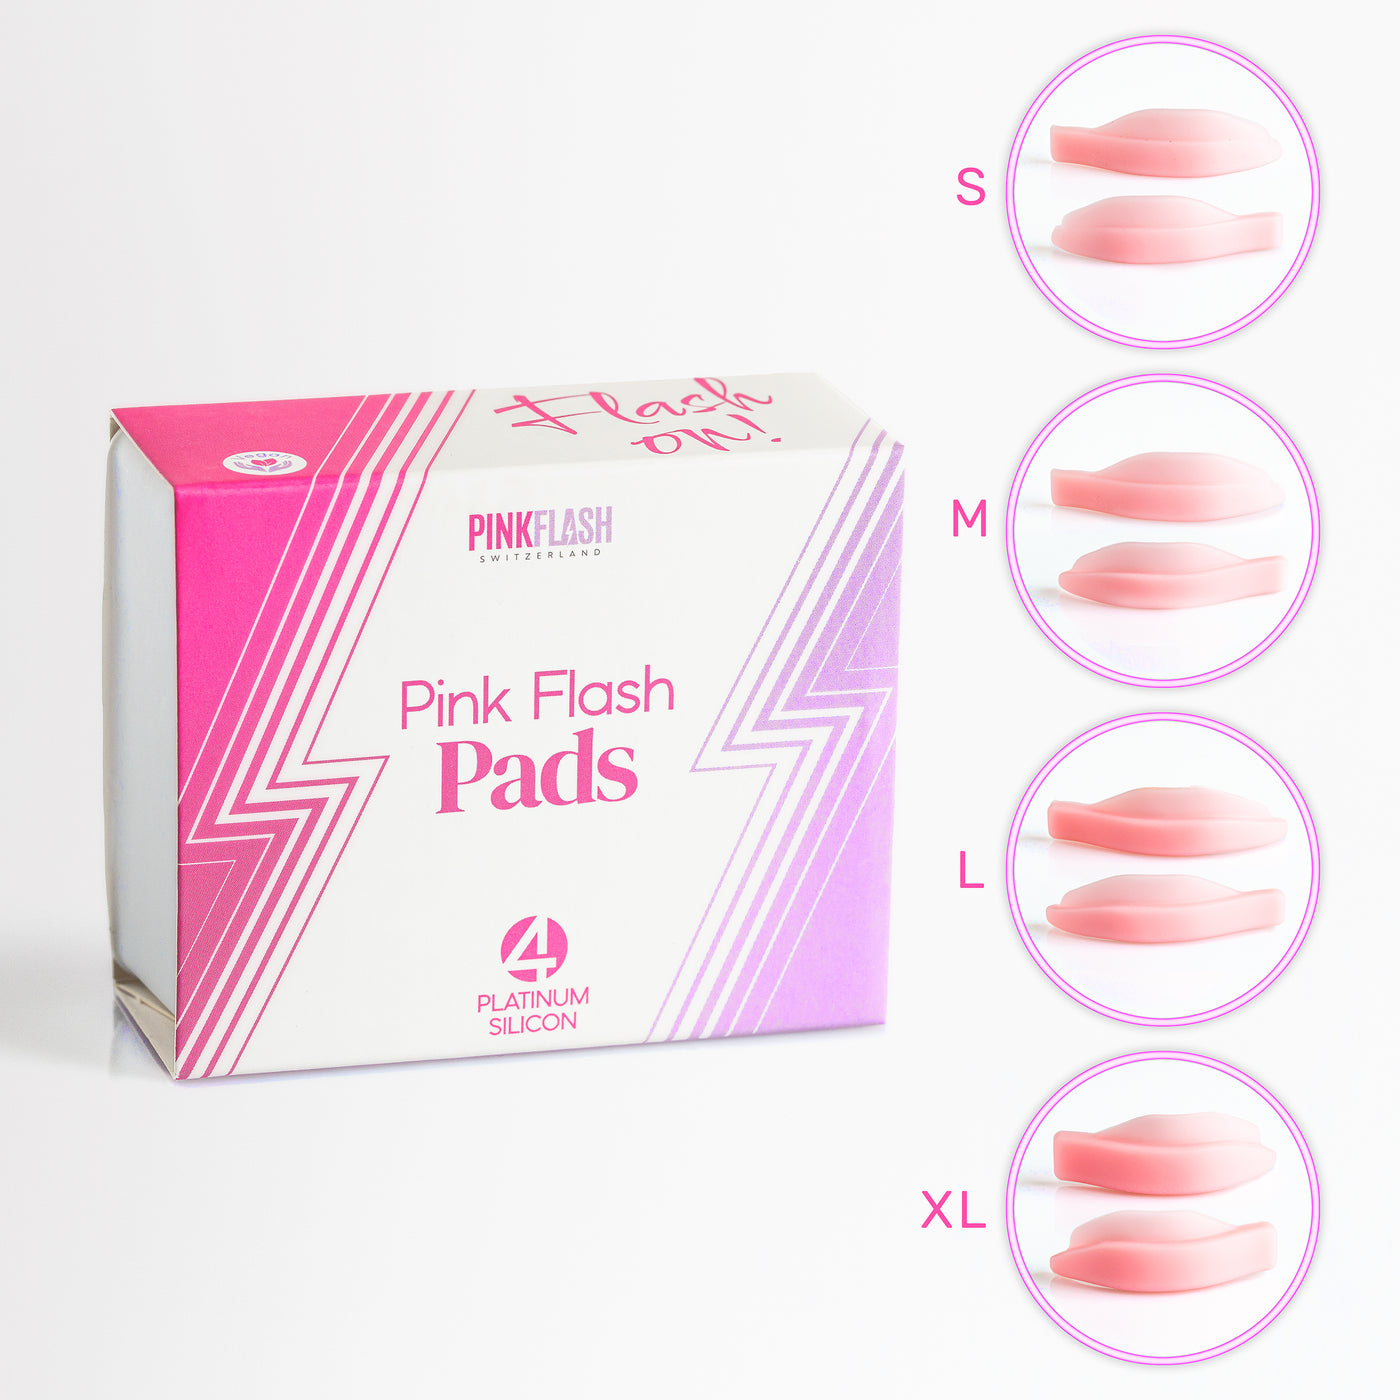 Pink Flash Pads